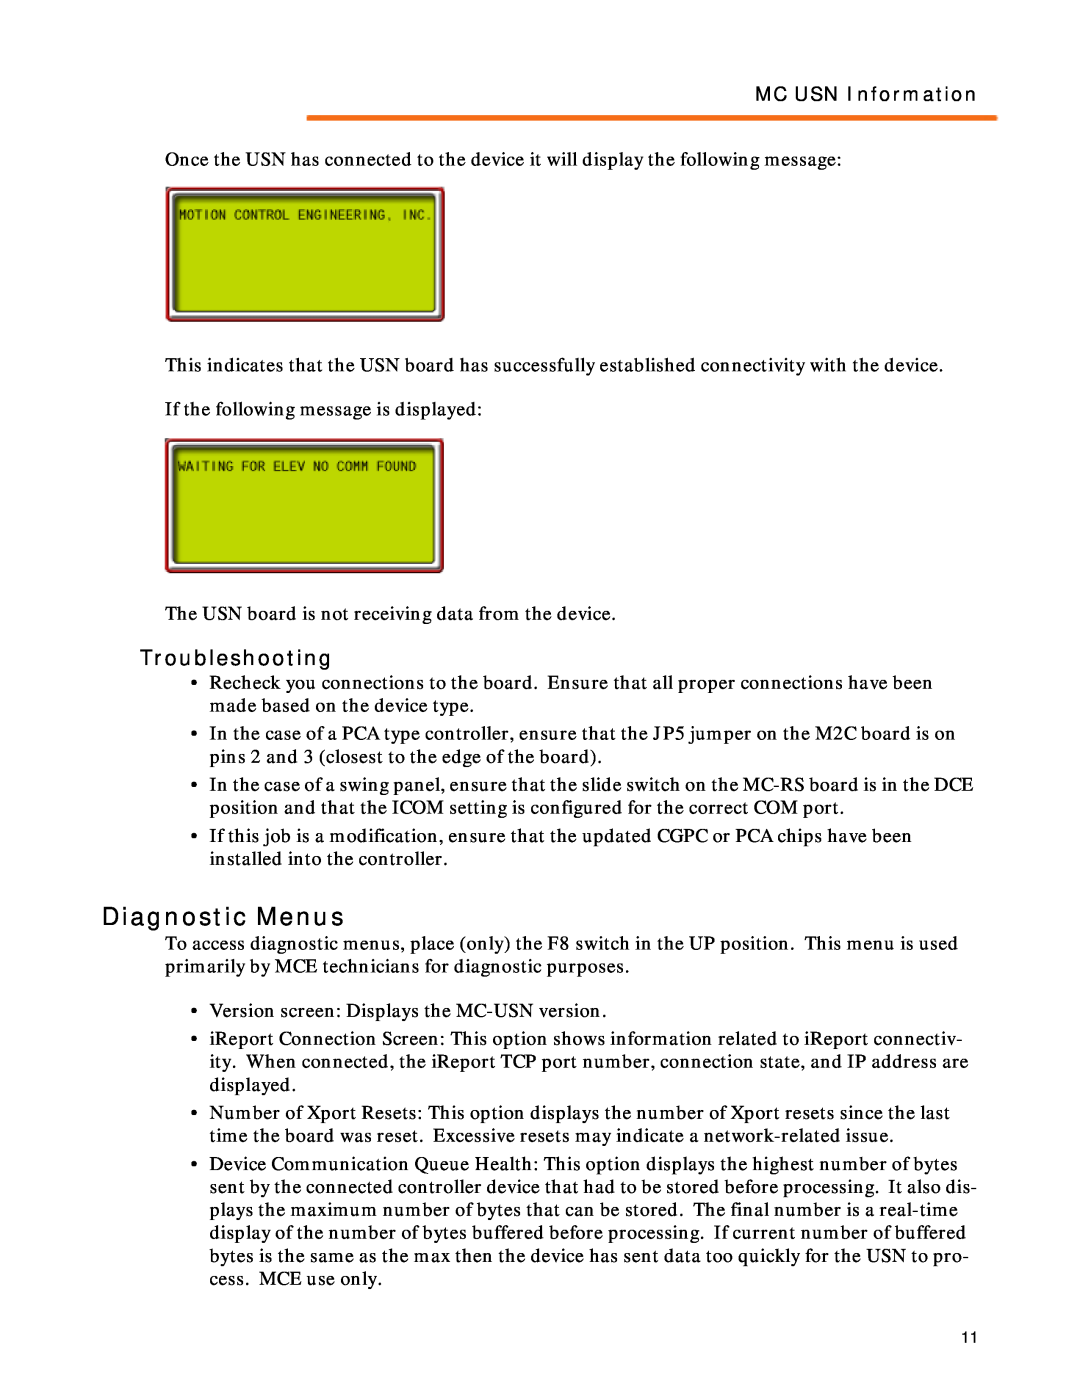 Motion 42-02-S028 manual Diagnostic Menus, Troubleshooting, MC USN Information 